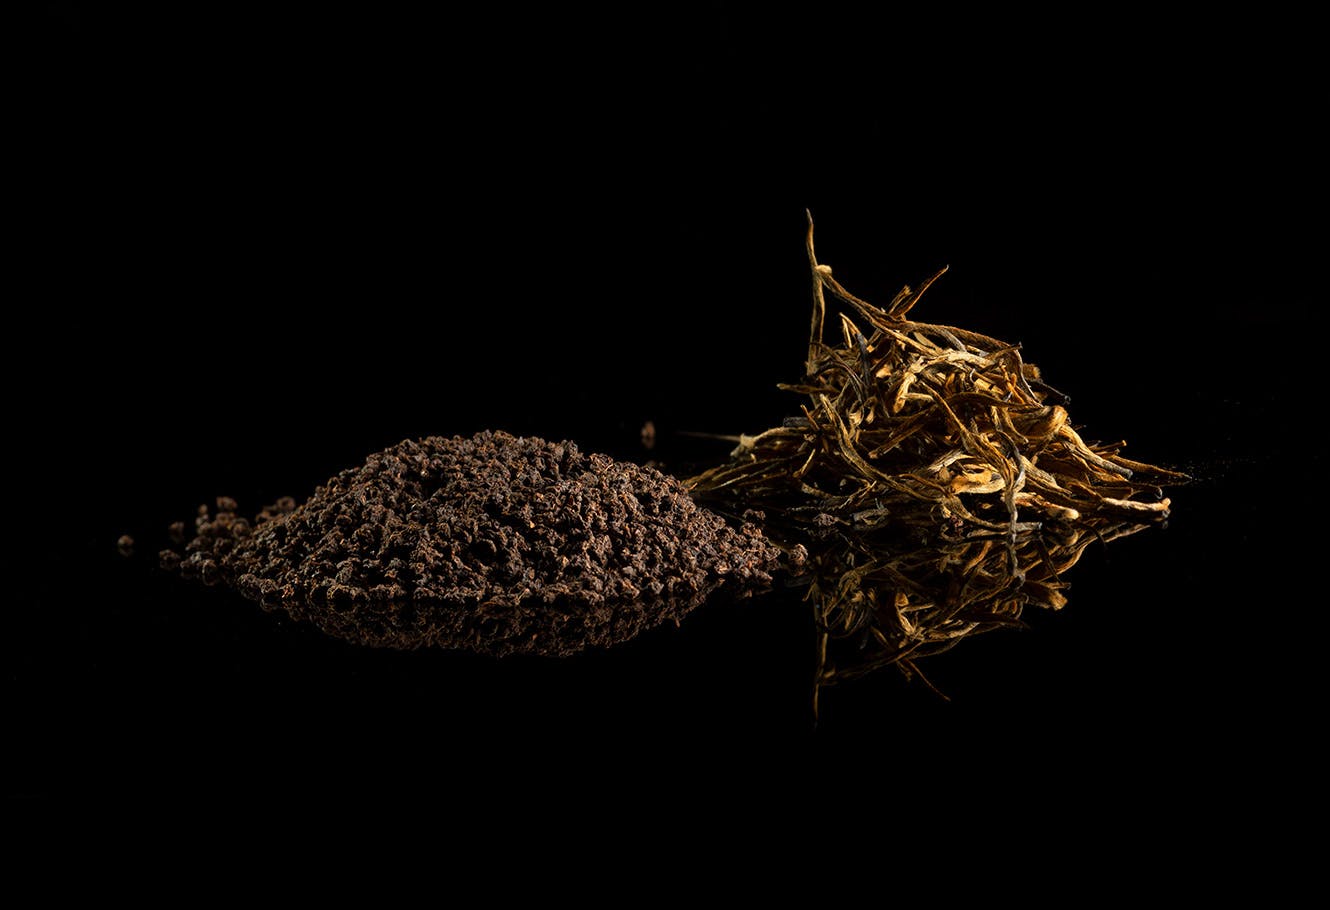 Black tea leaves in bulk.